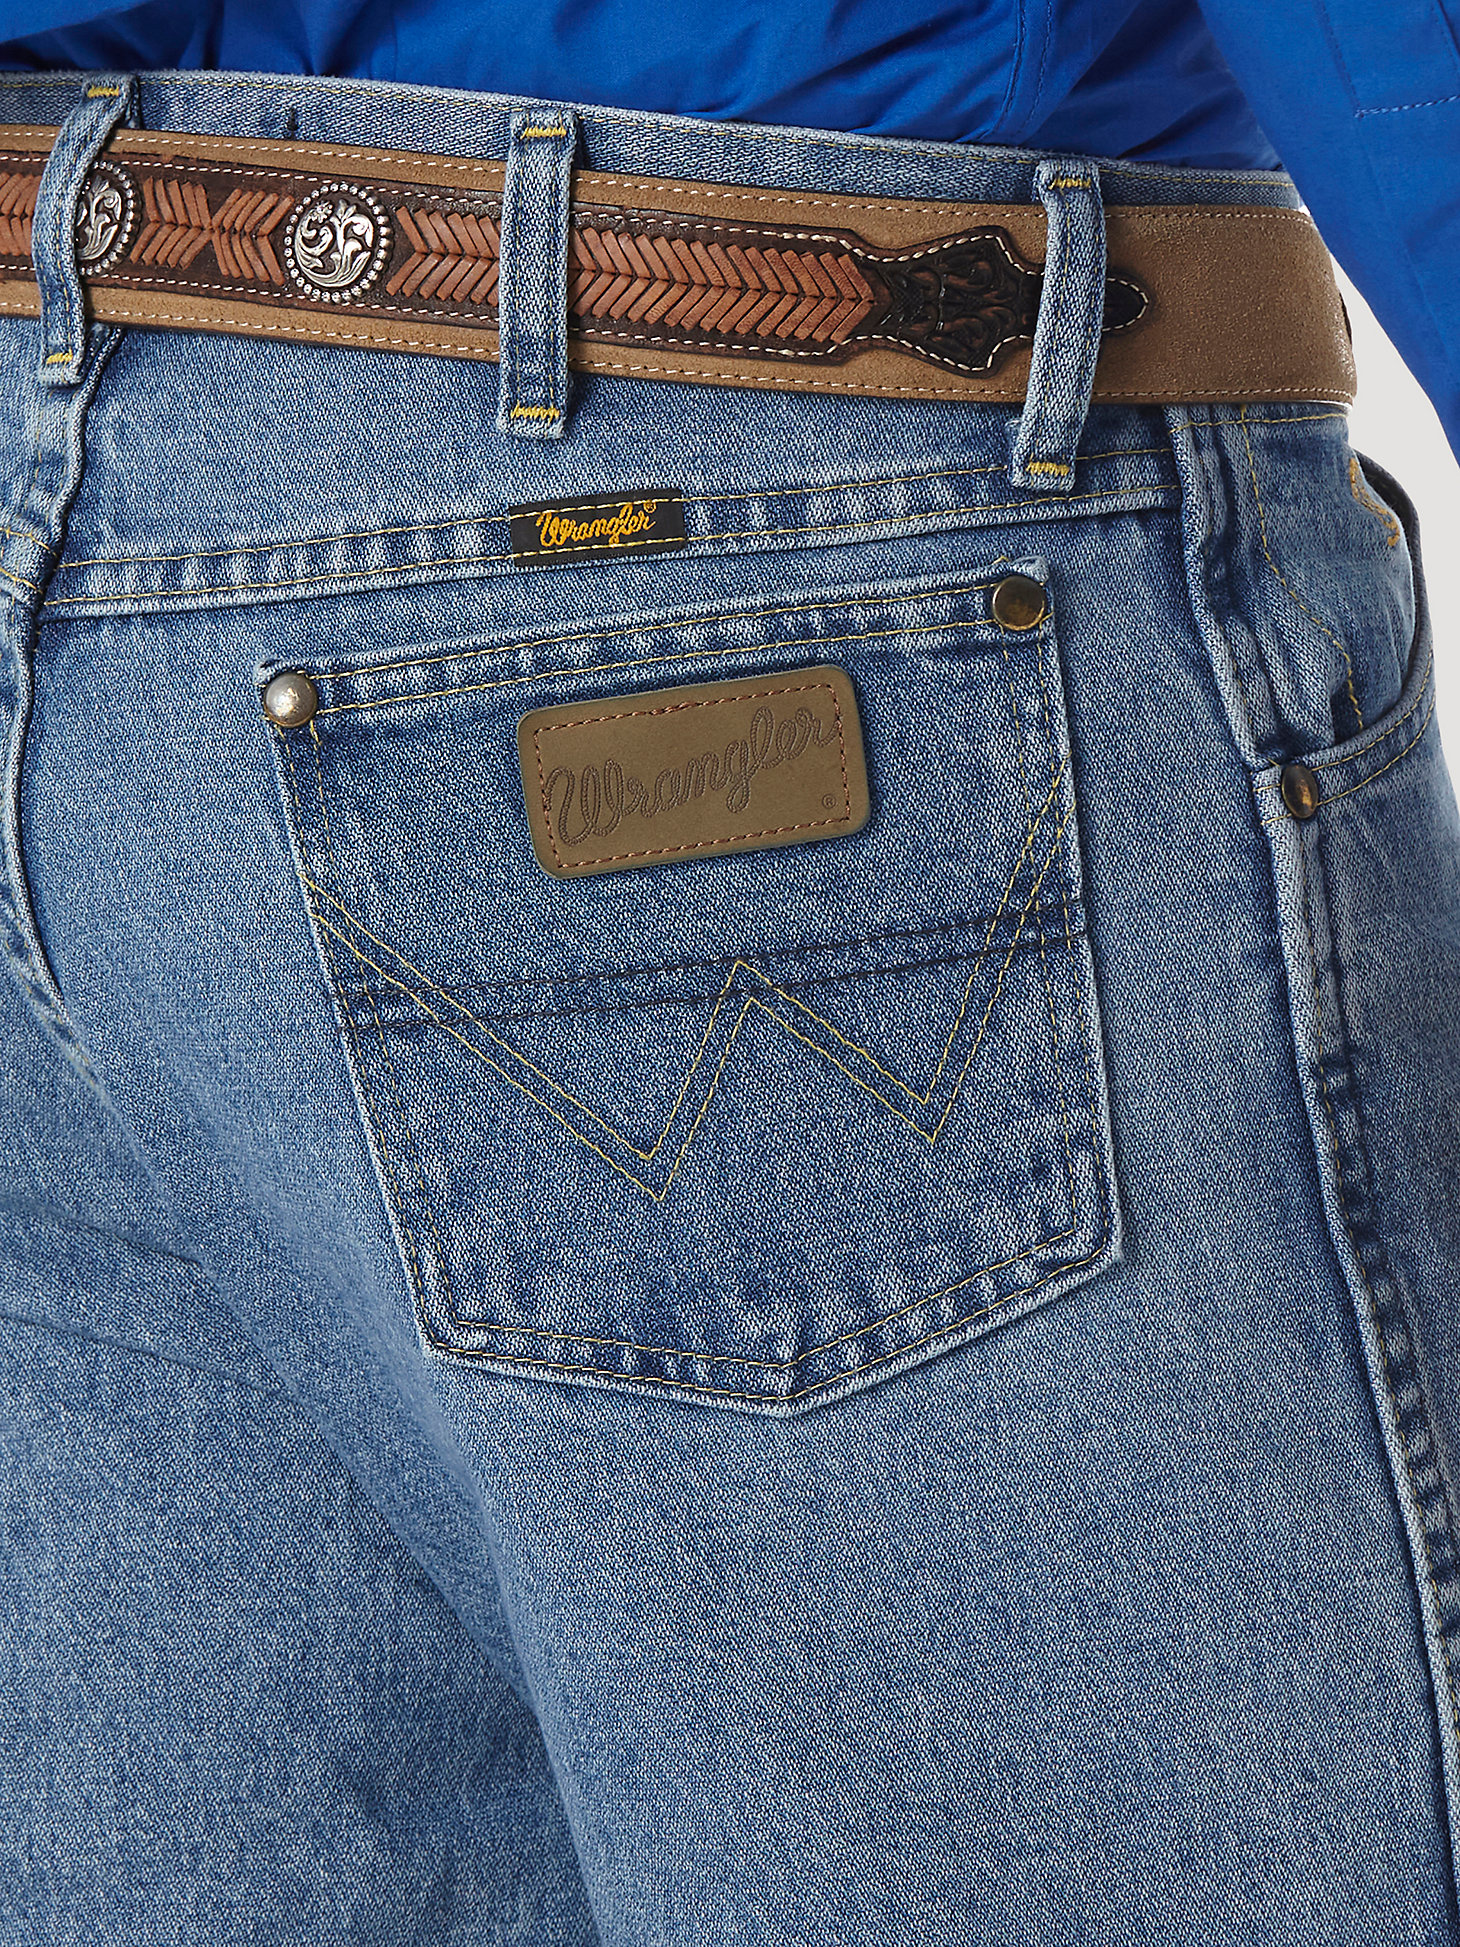 George Strait Cowboy Cut® Original Fit Jean in Stone Wash alternative view 4